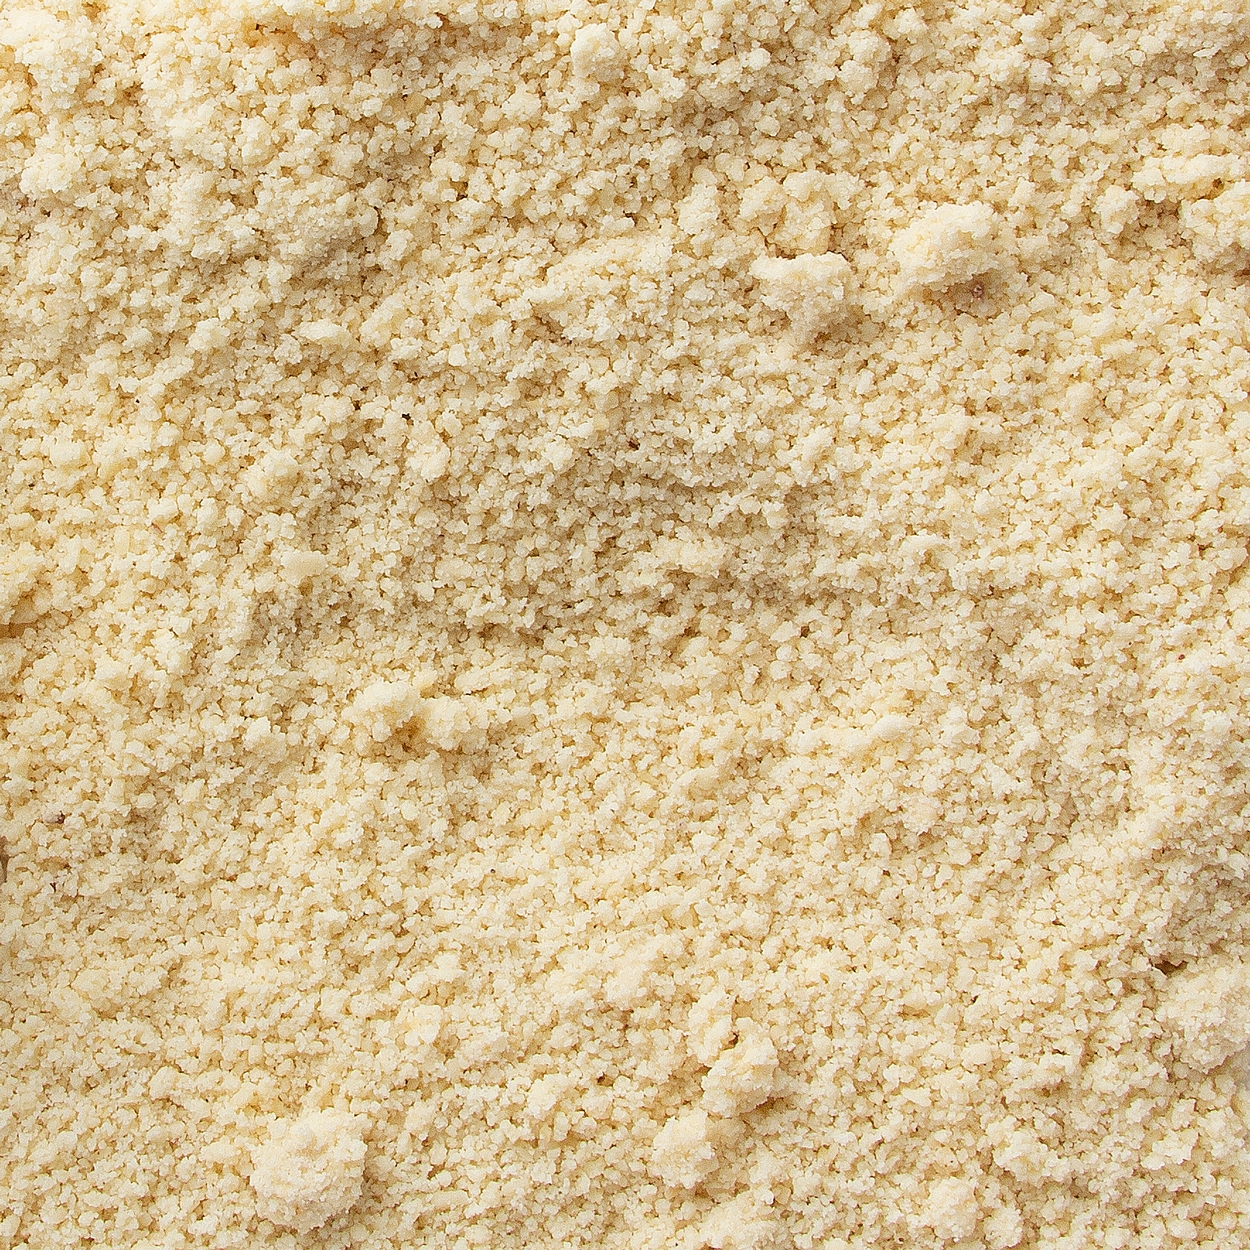 lost ark cashew flour